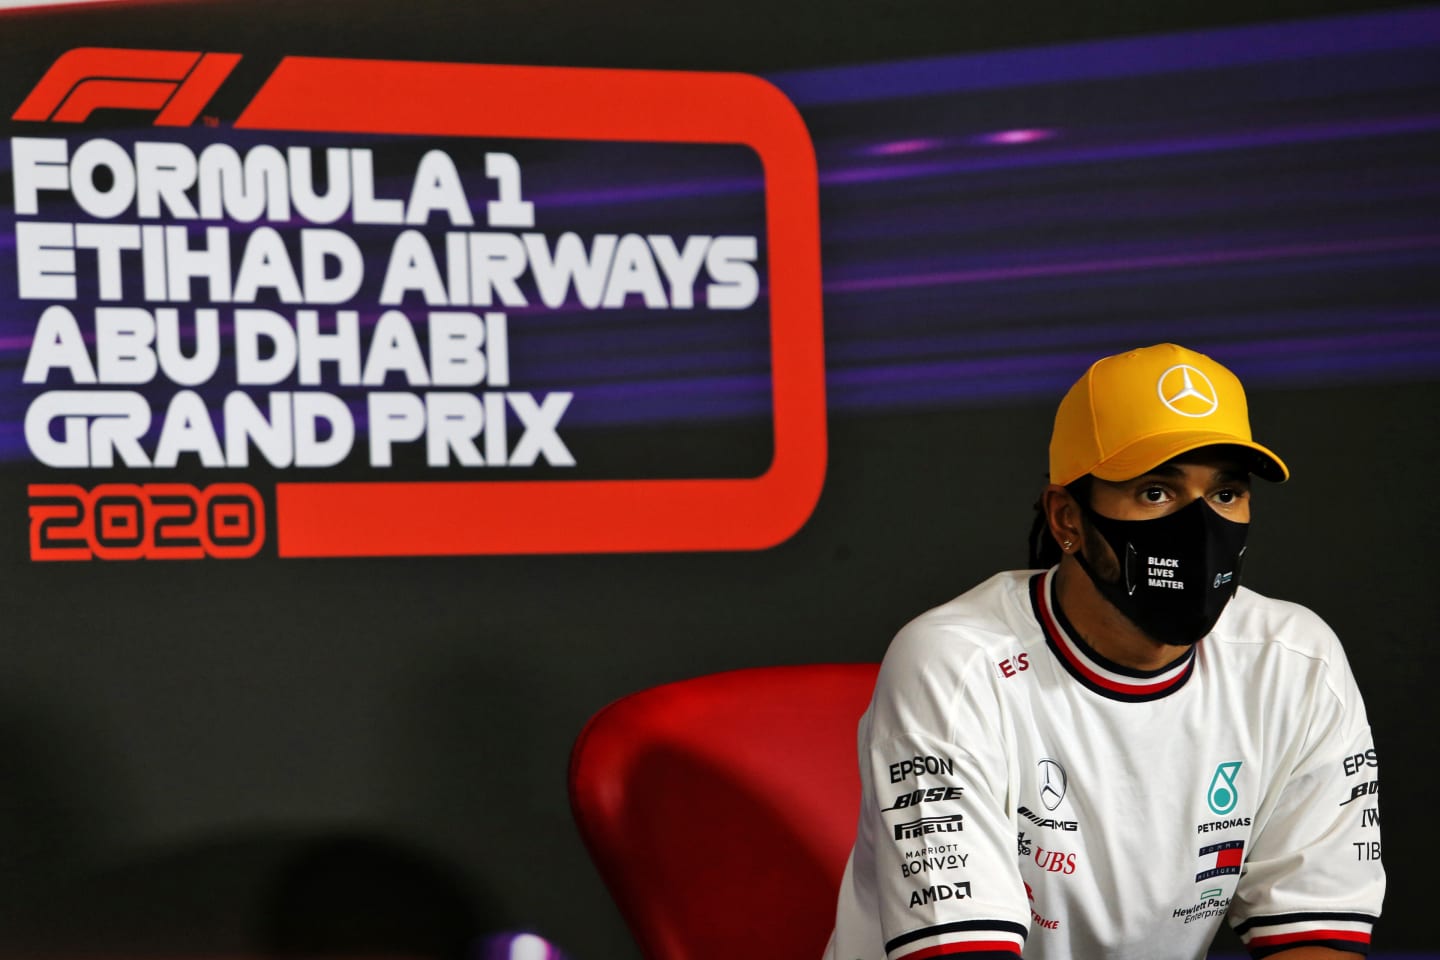 ABU DHABI, UNITED ARAB EMIRATES - DECEMBER 12: Third place qualifier Lewis Hamilton of Great